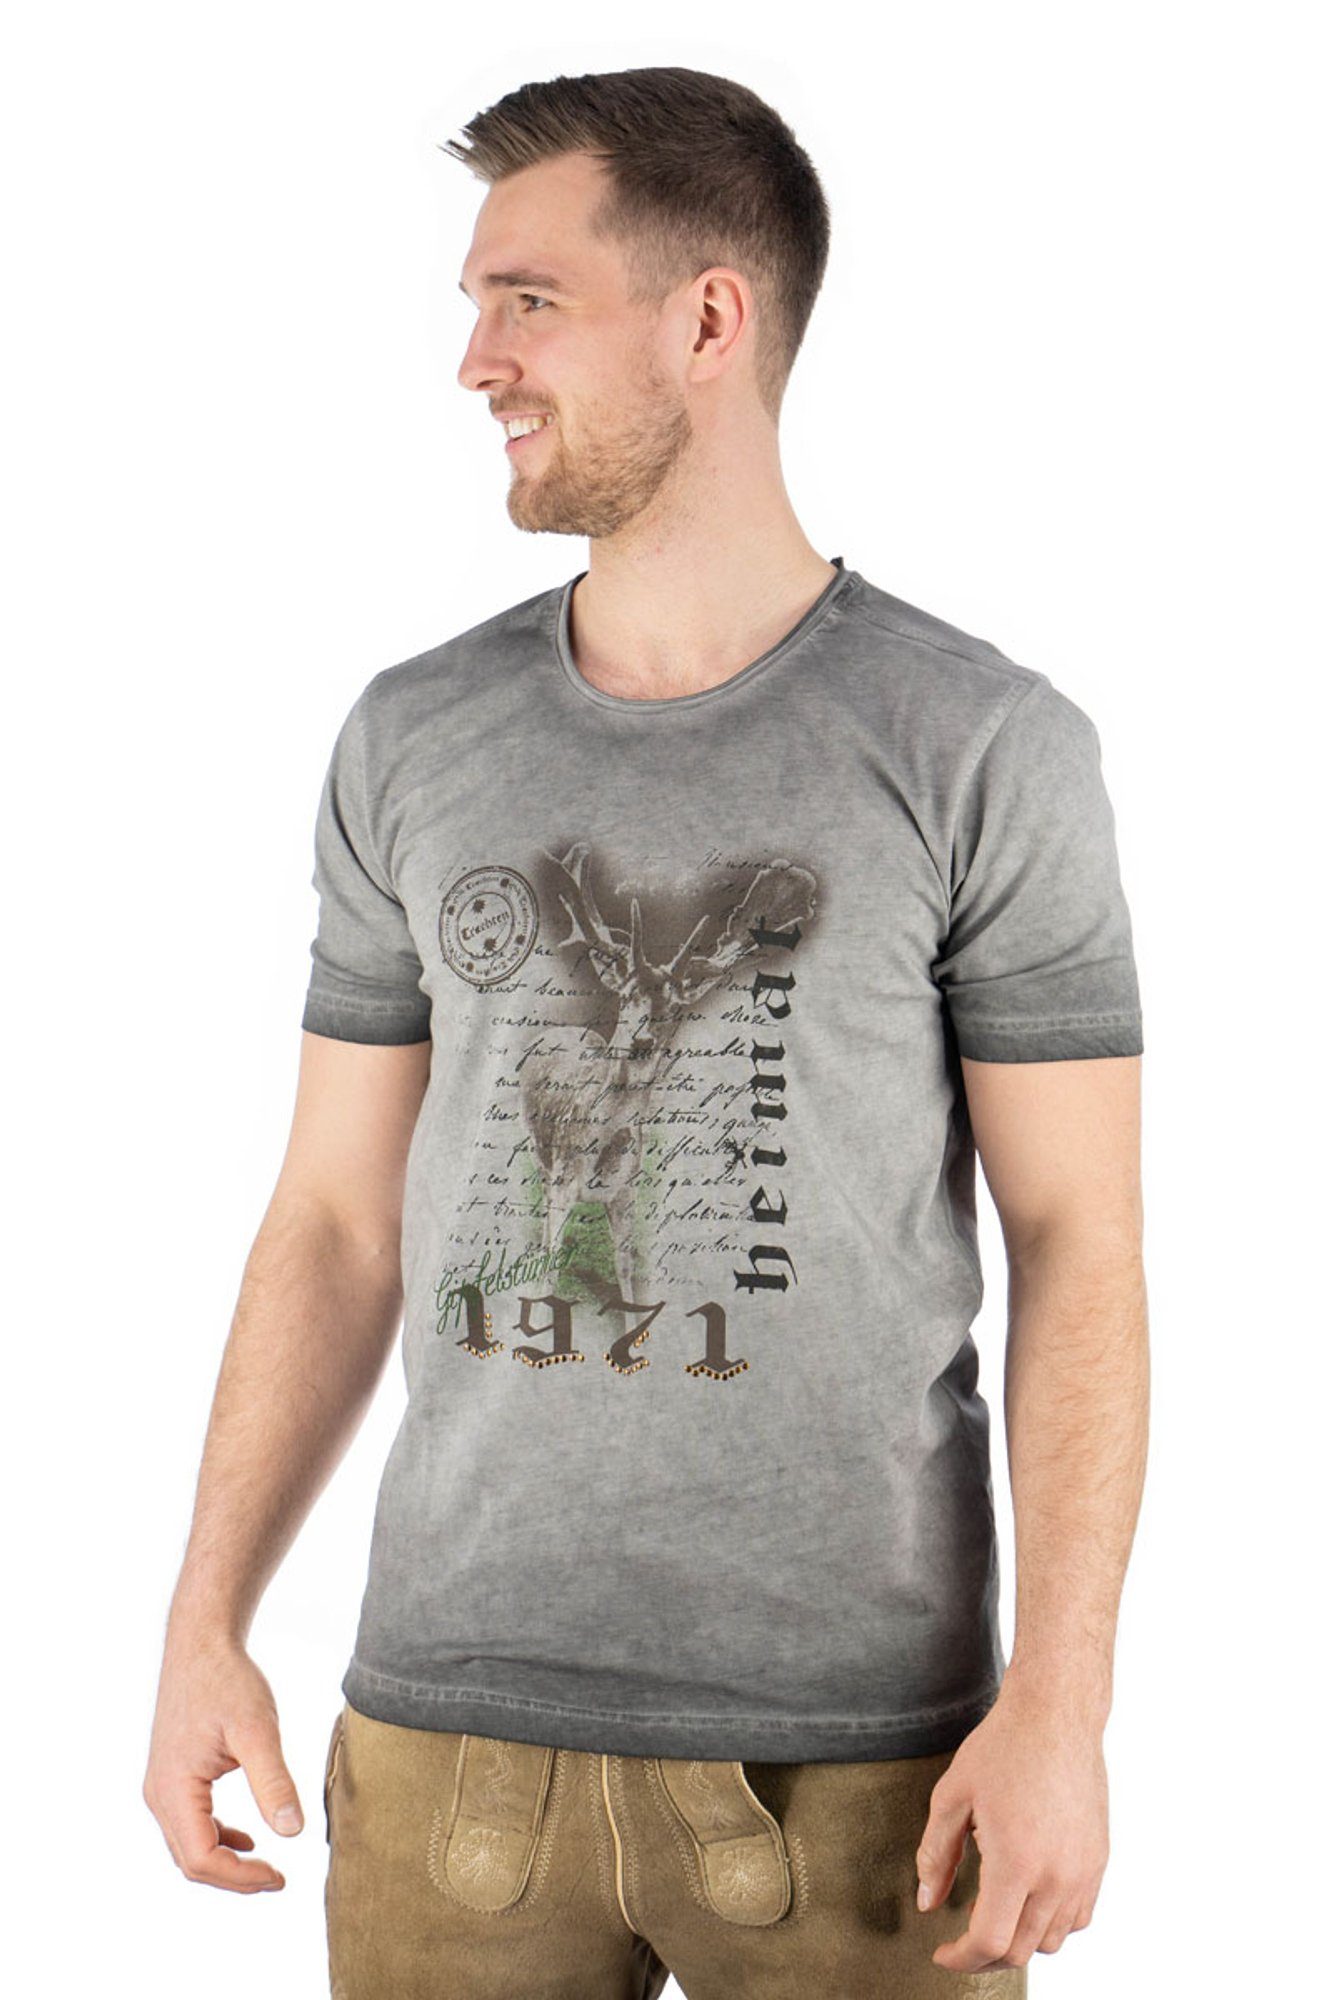 OS-Trachten Trachtenshirt Ofapuo Kurzarm T-Shirt mit Motivdruck anthrazit